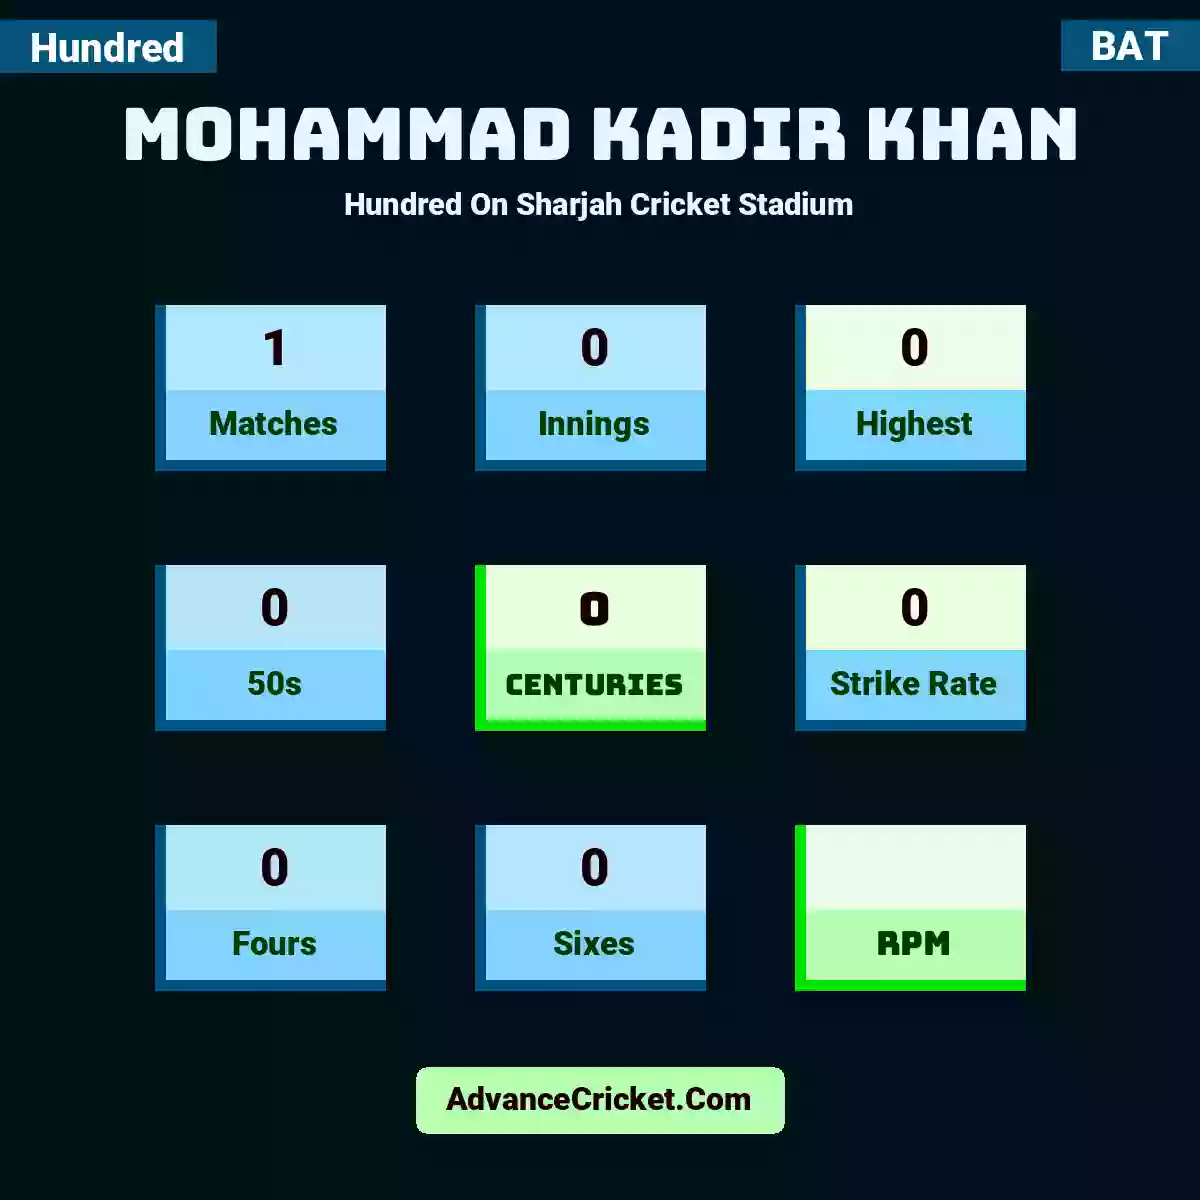 Mohammad Kadir Khan Hundred  On Sharjah Cricket Stadium, Mohammad Kadir Khan played 1 matches, scored 0 runs as highest, 0 half-centuries, and 0 centuries, with a strike rate of 0. M.Kadir.Khan hit 0 fours and 0 sixes.